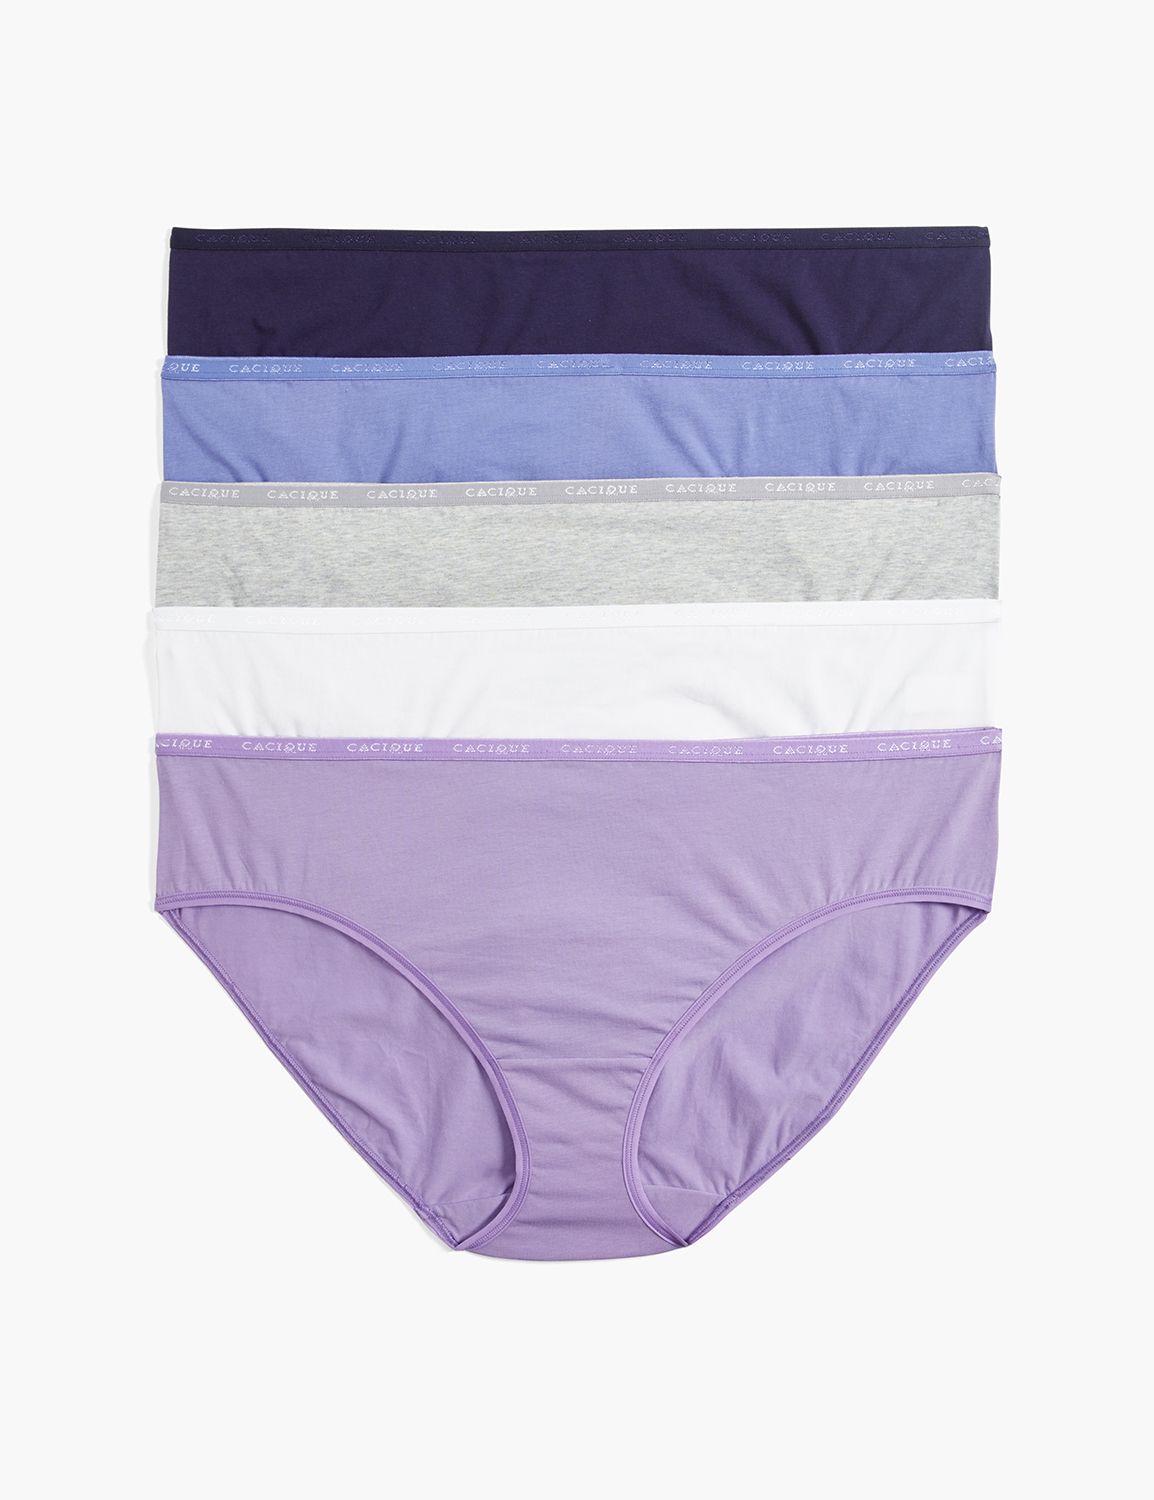 Lane Bryant Cacique Cotton Hipster Panties Underwear Stars Navy Pink 30 /  32